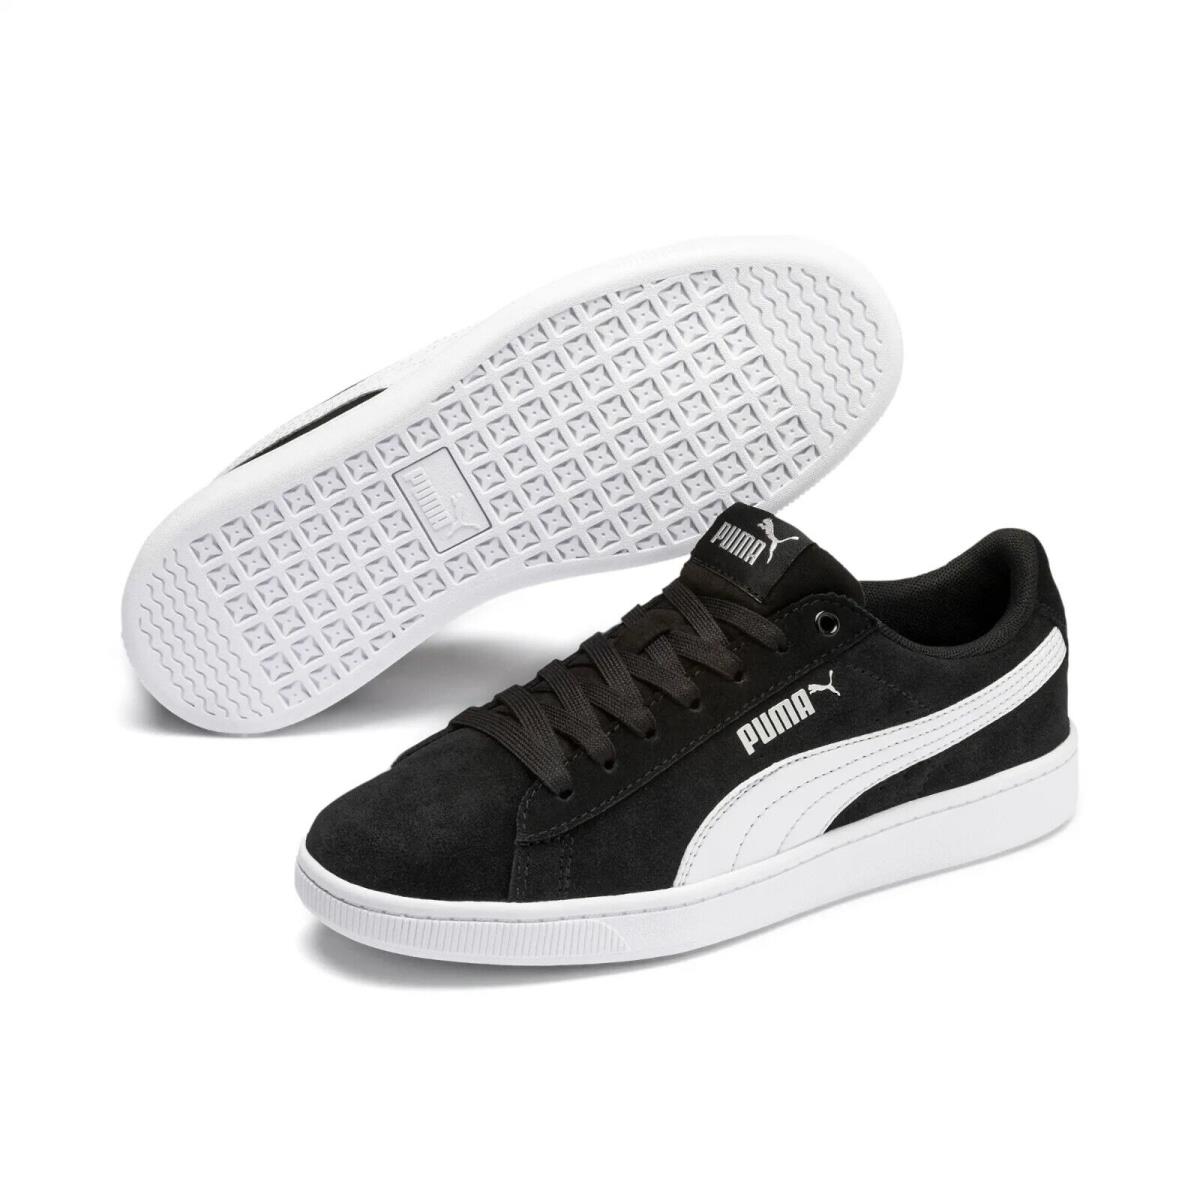 Puma Suede v2 Distinct Life 364826-01 Men`s White/black Sneakers Shoes 10 WR216